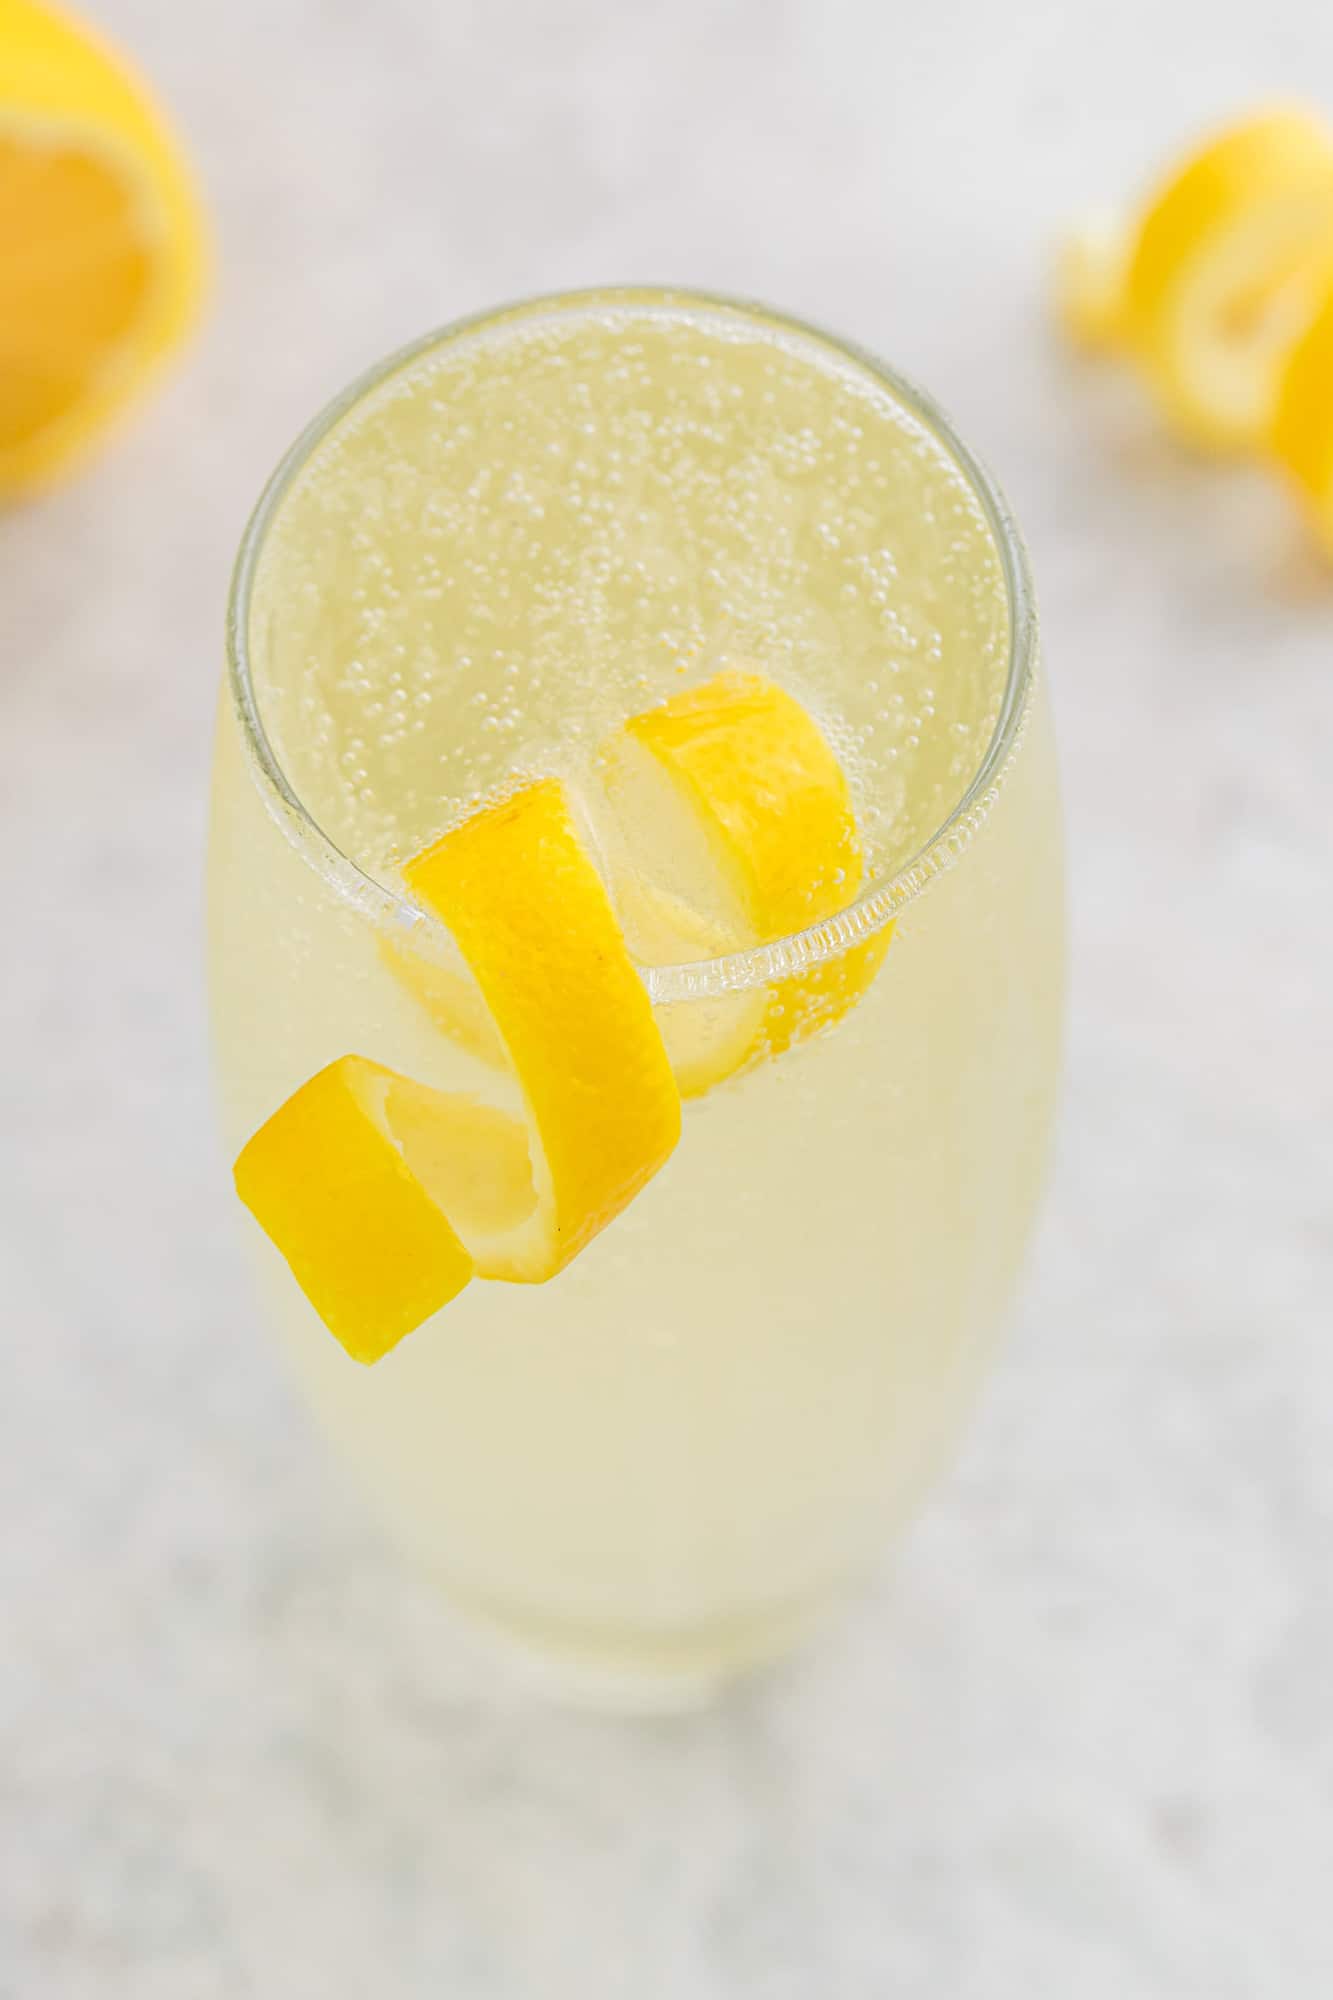 Lemon twist on a glass of lemon beverage.